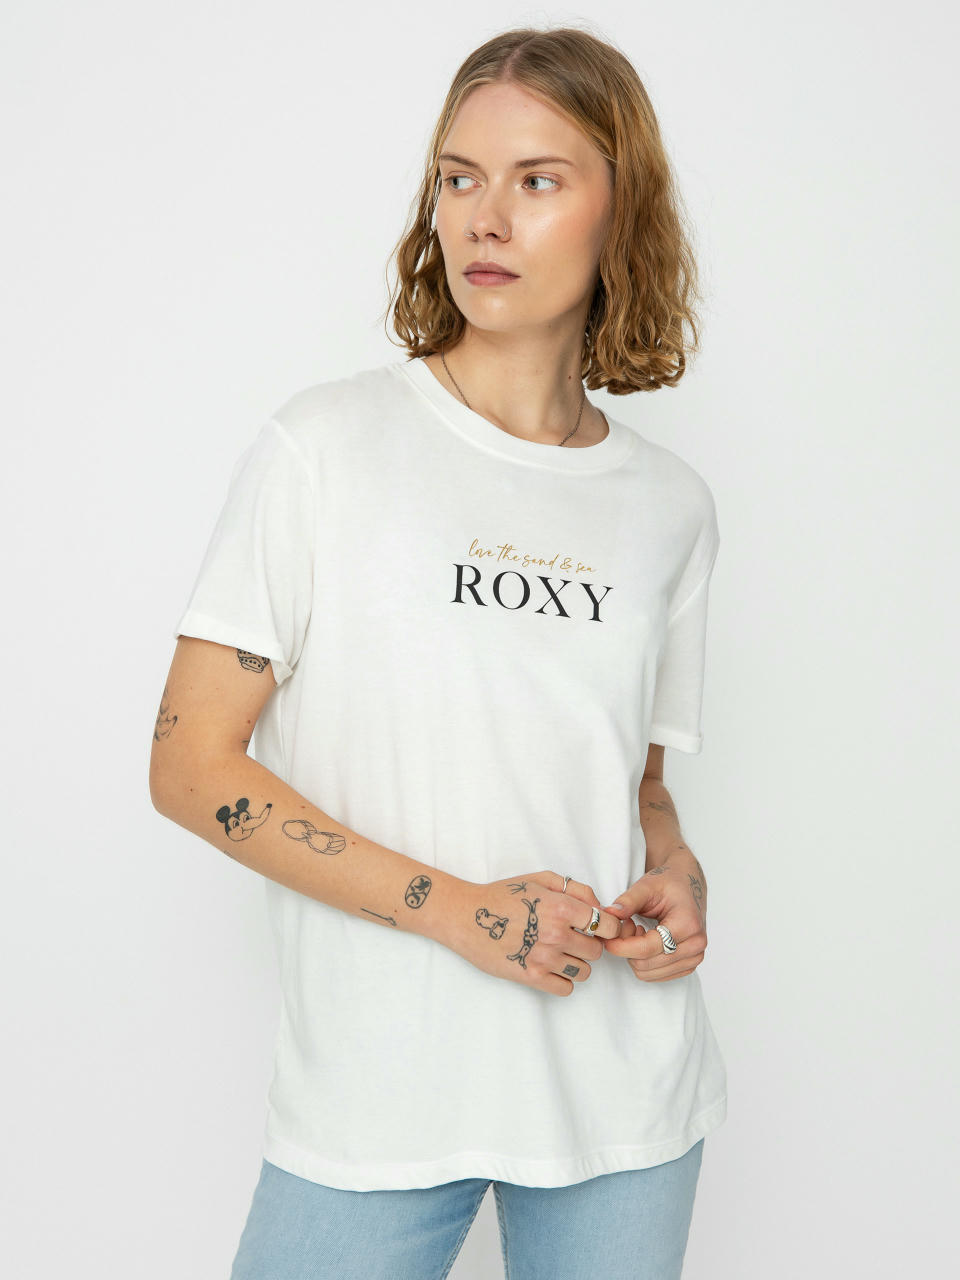 Urban Roxy SUPER-SHOP Sale - 